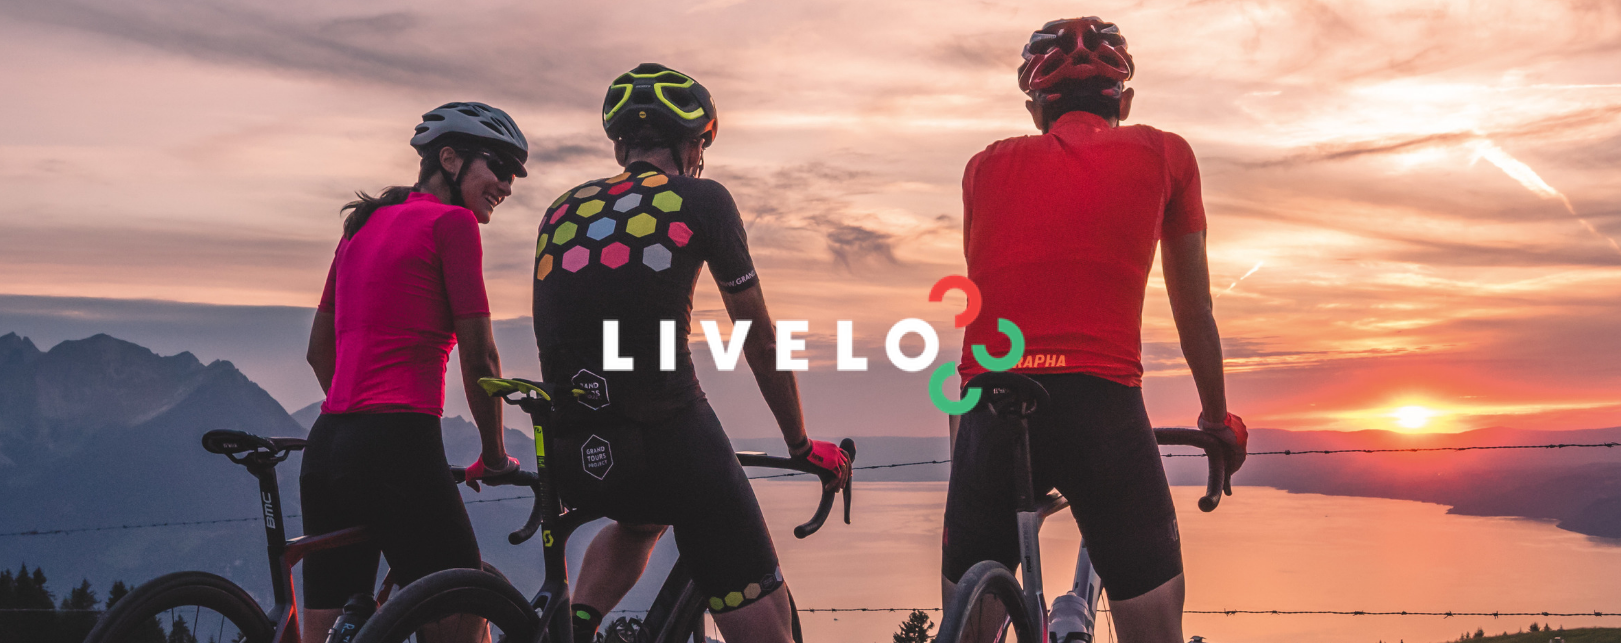 Livelo - Road Bike Rentals